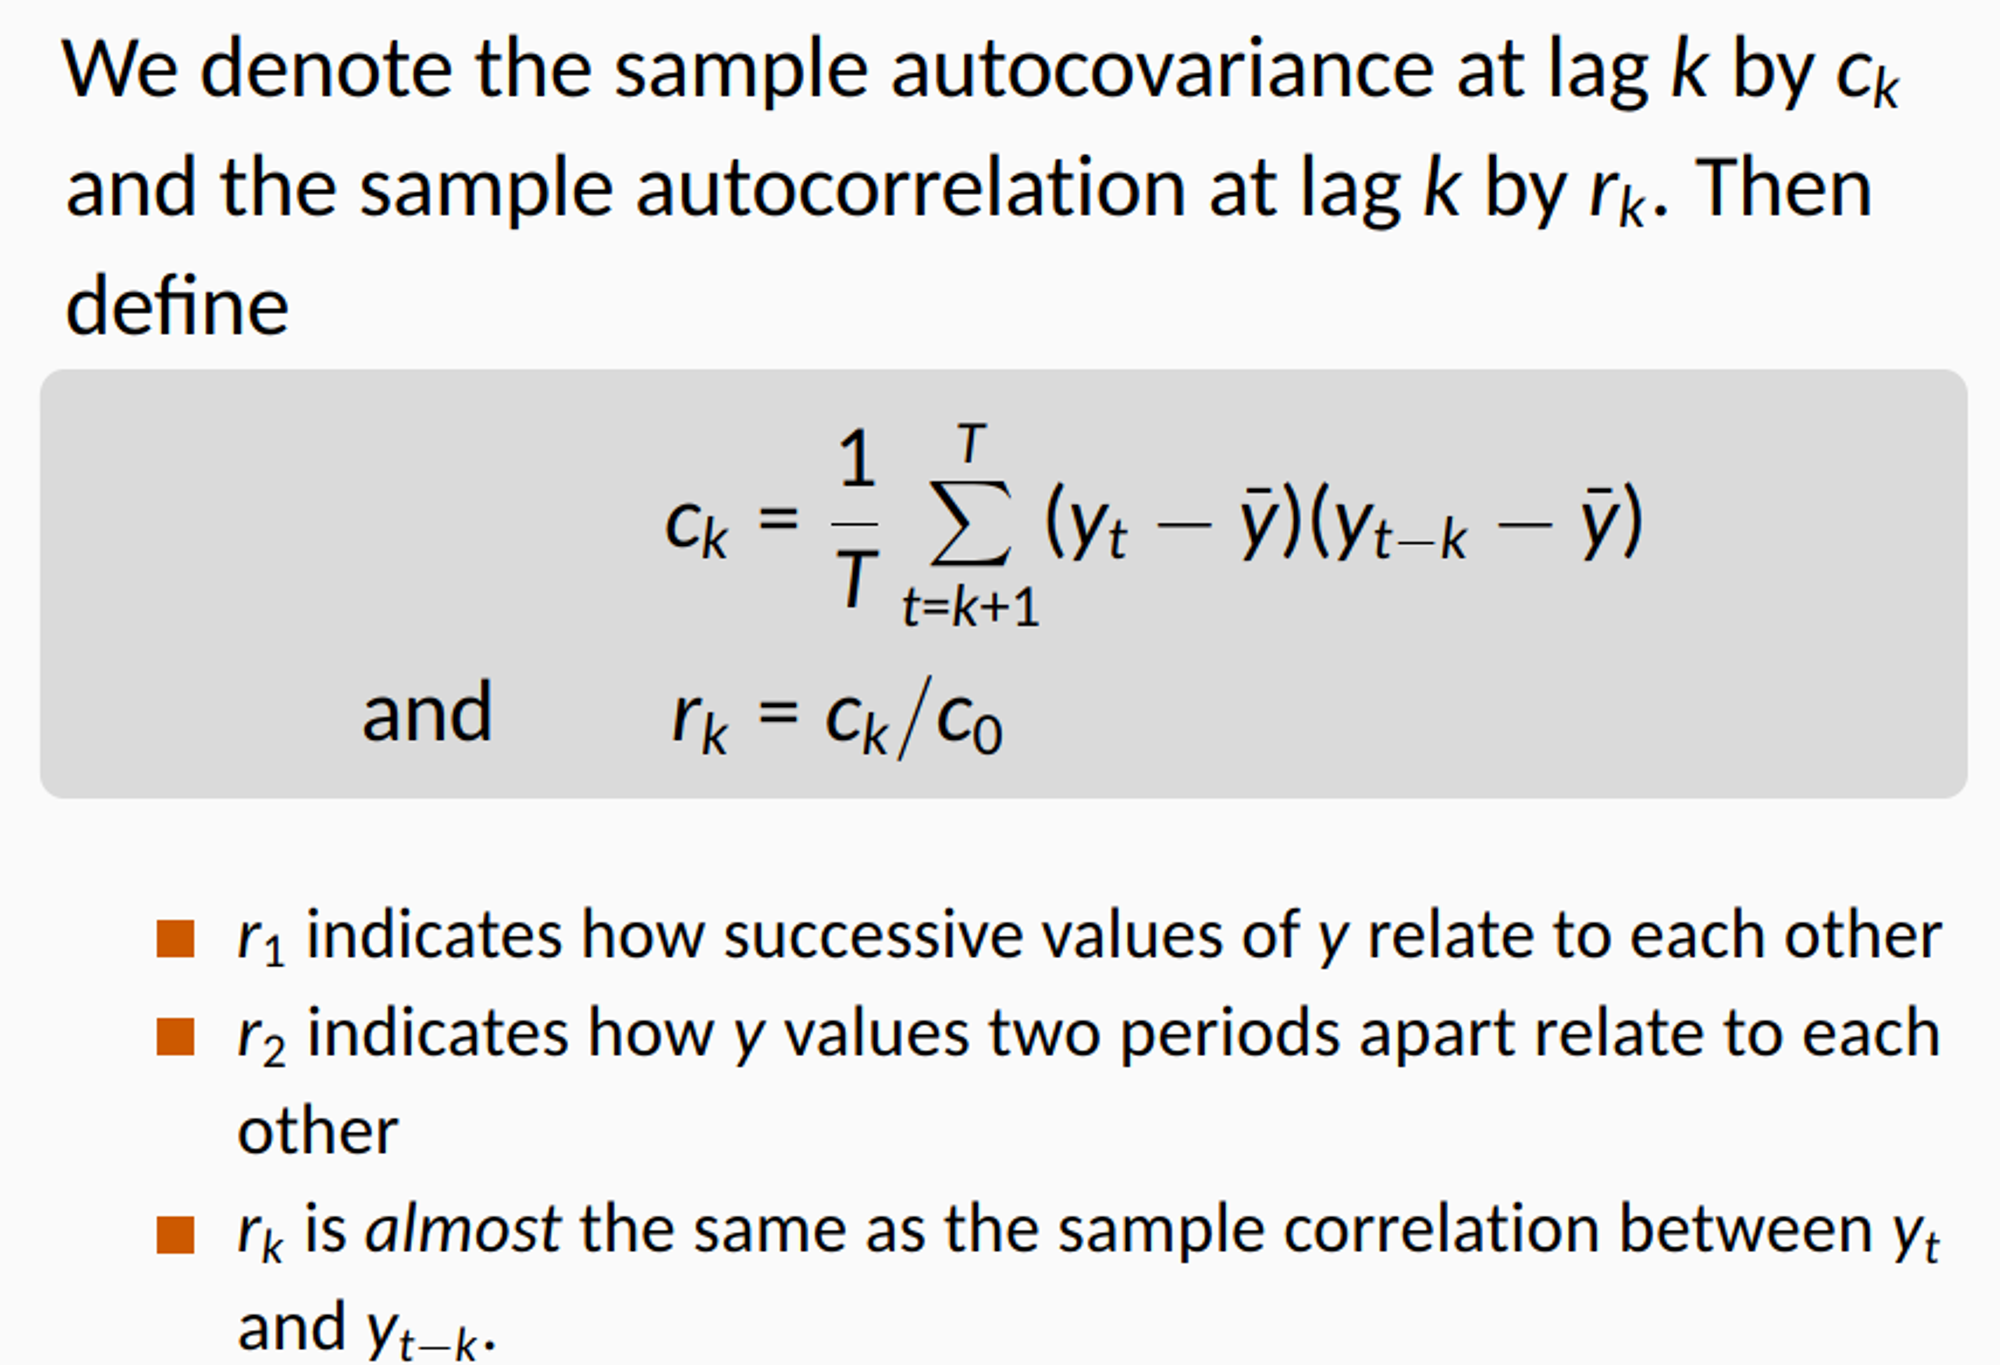 r = autocorrelation coefficient